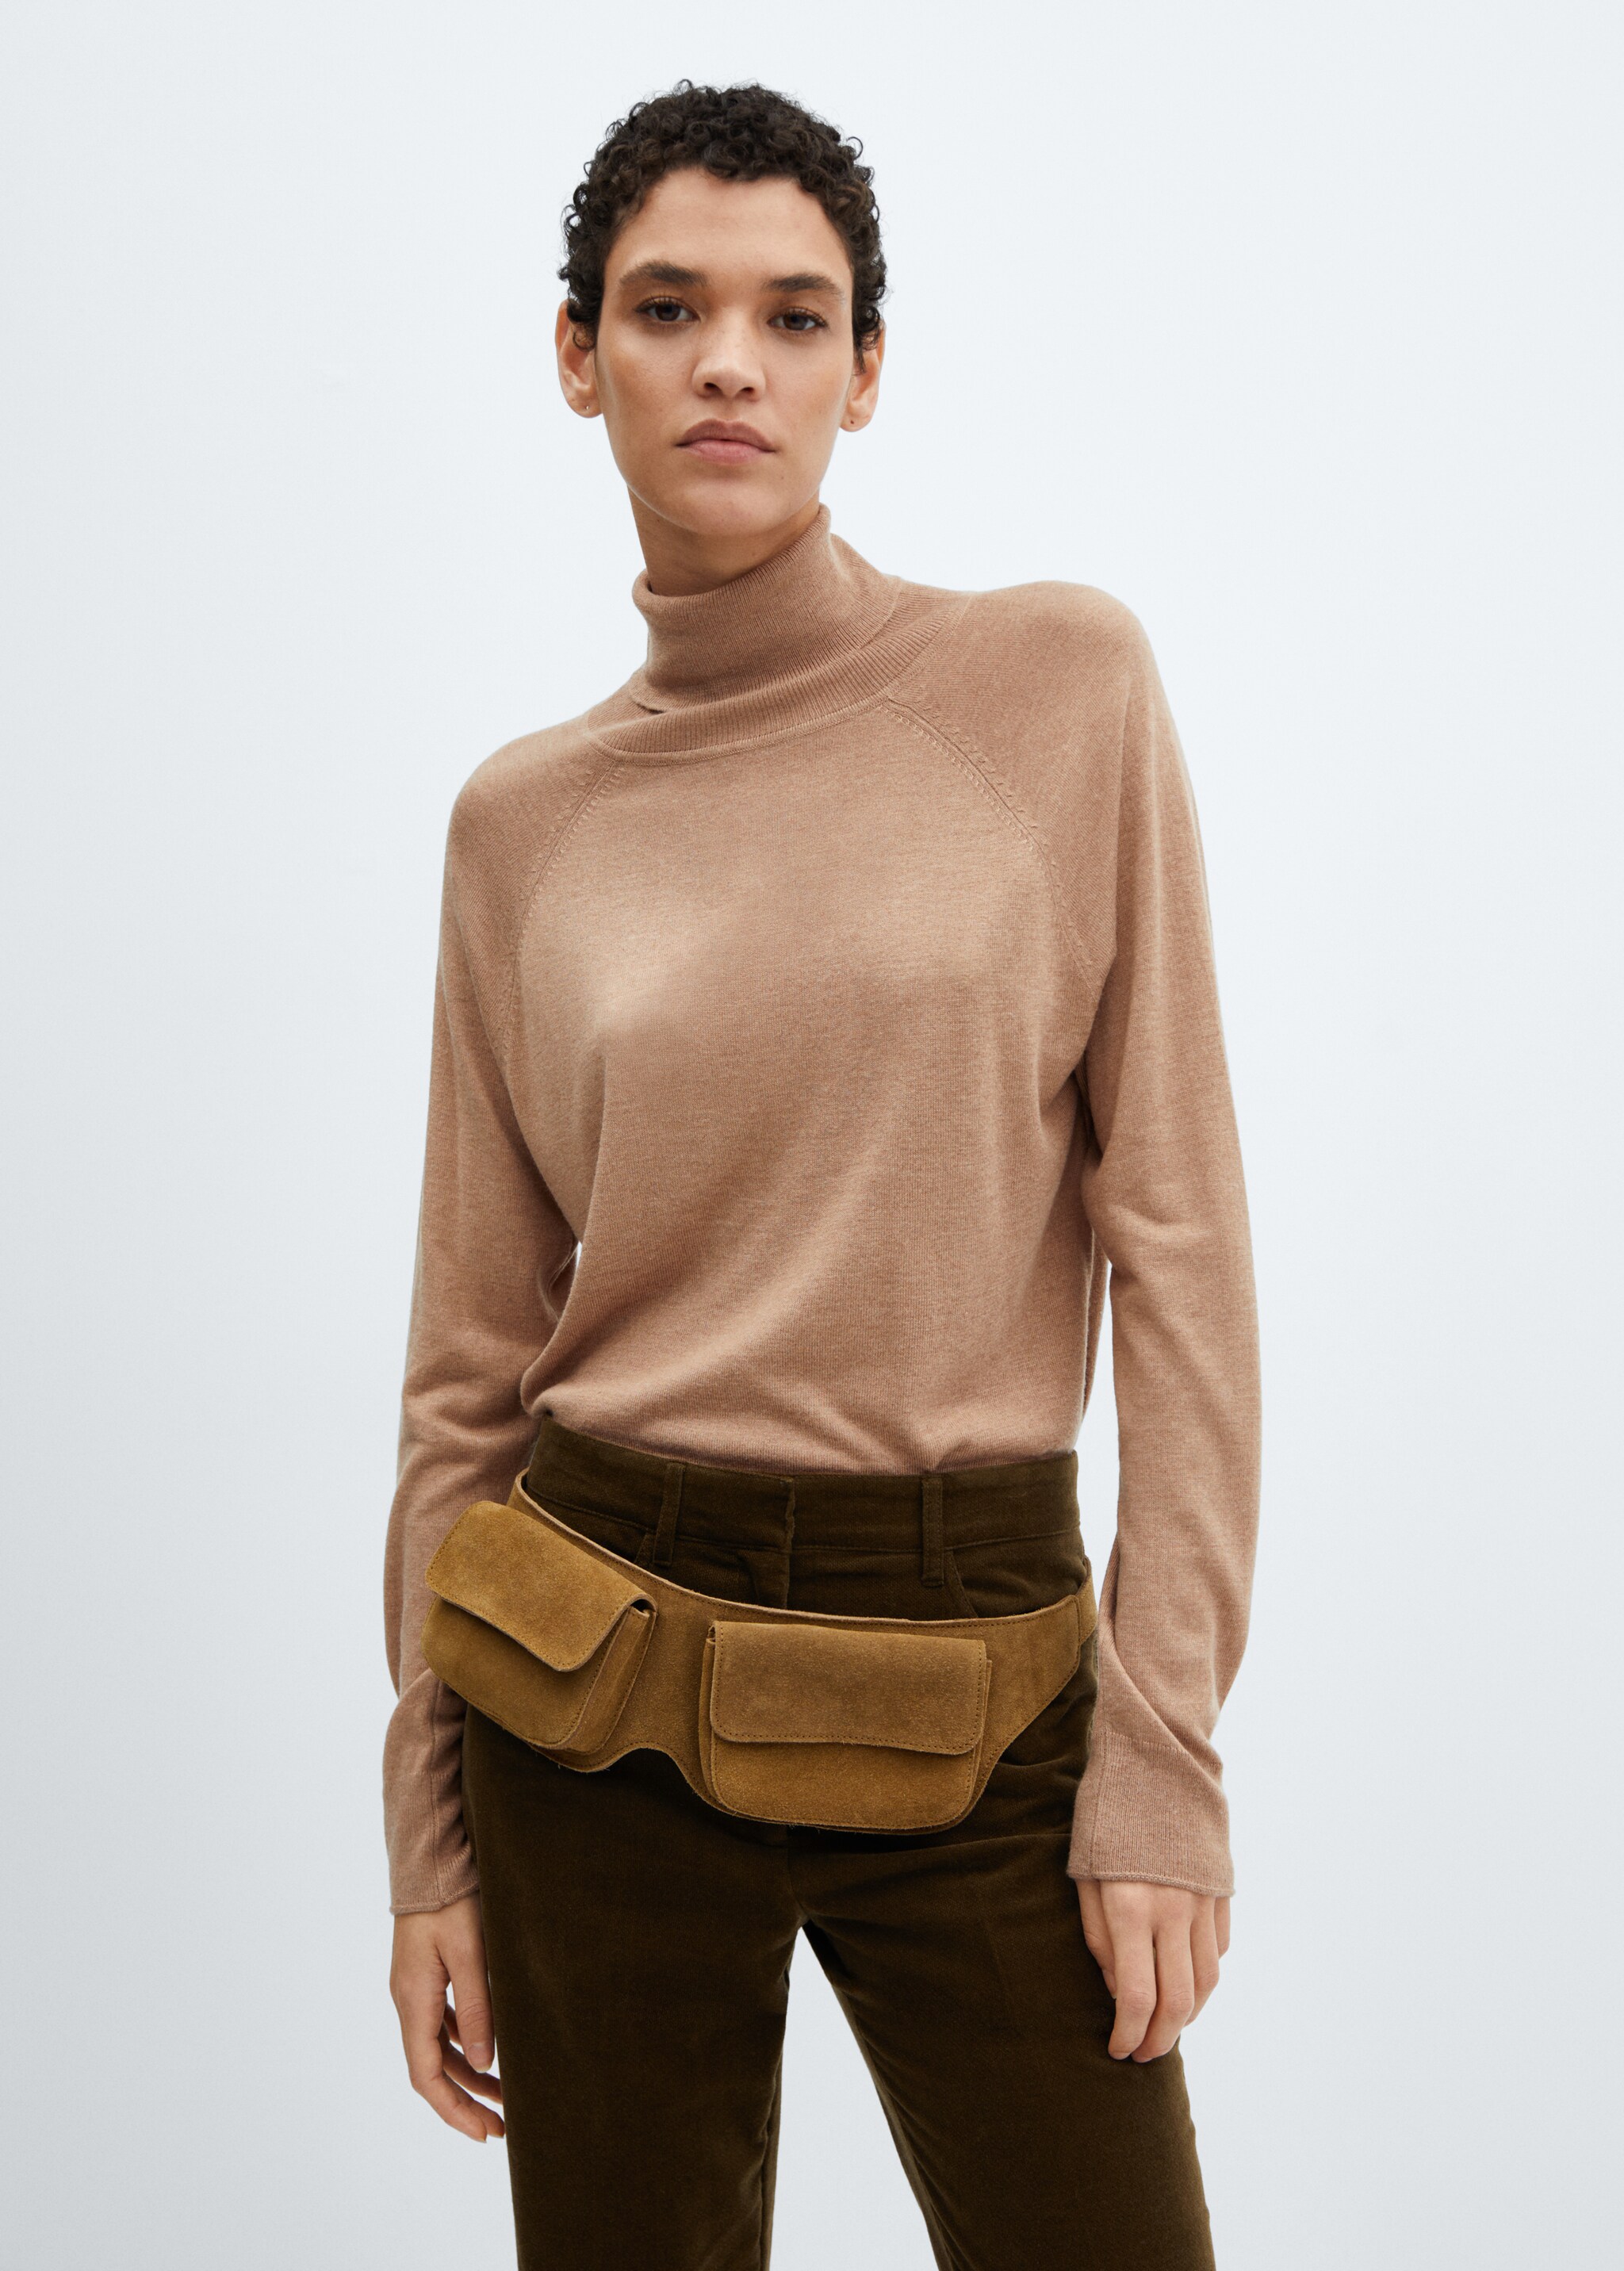 Fine-knit turtleneck sweater - Medium plane